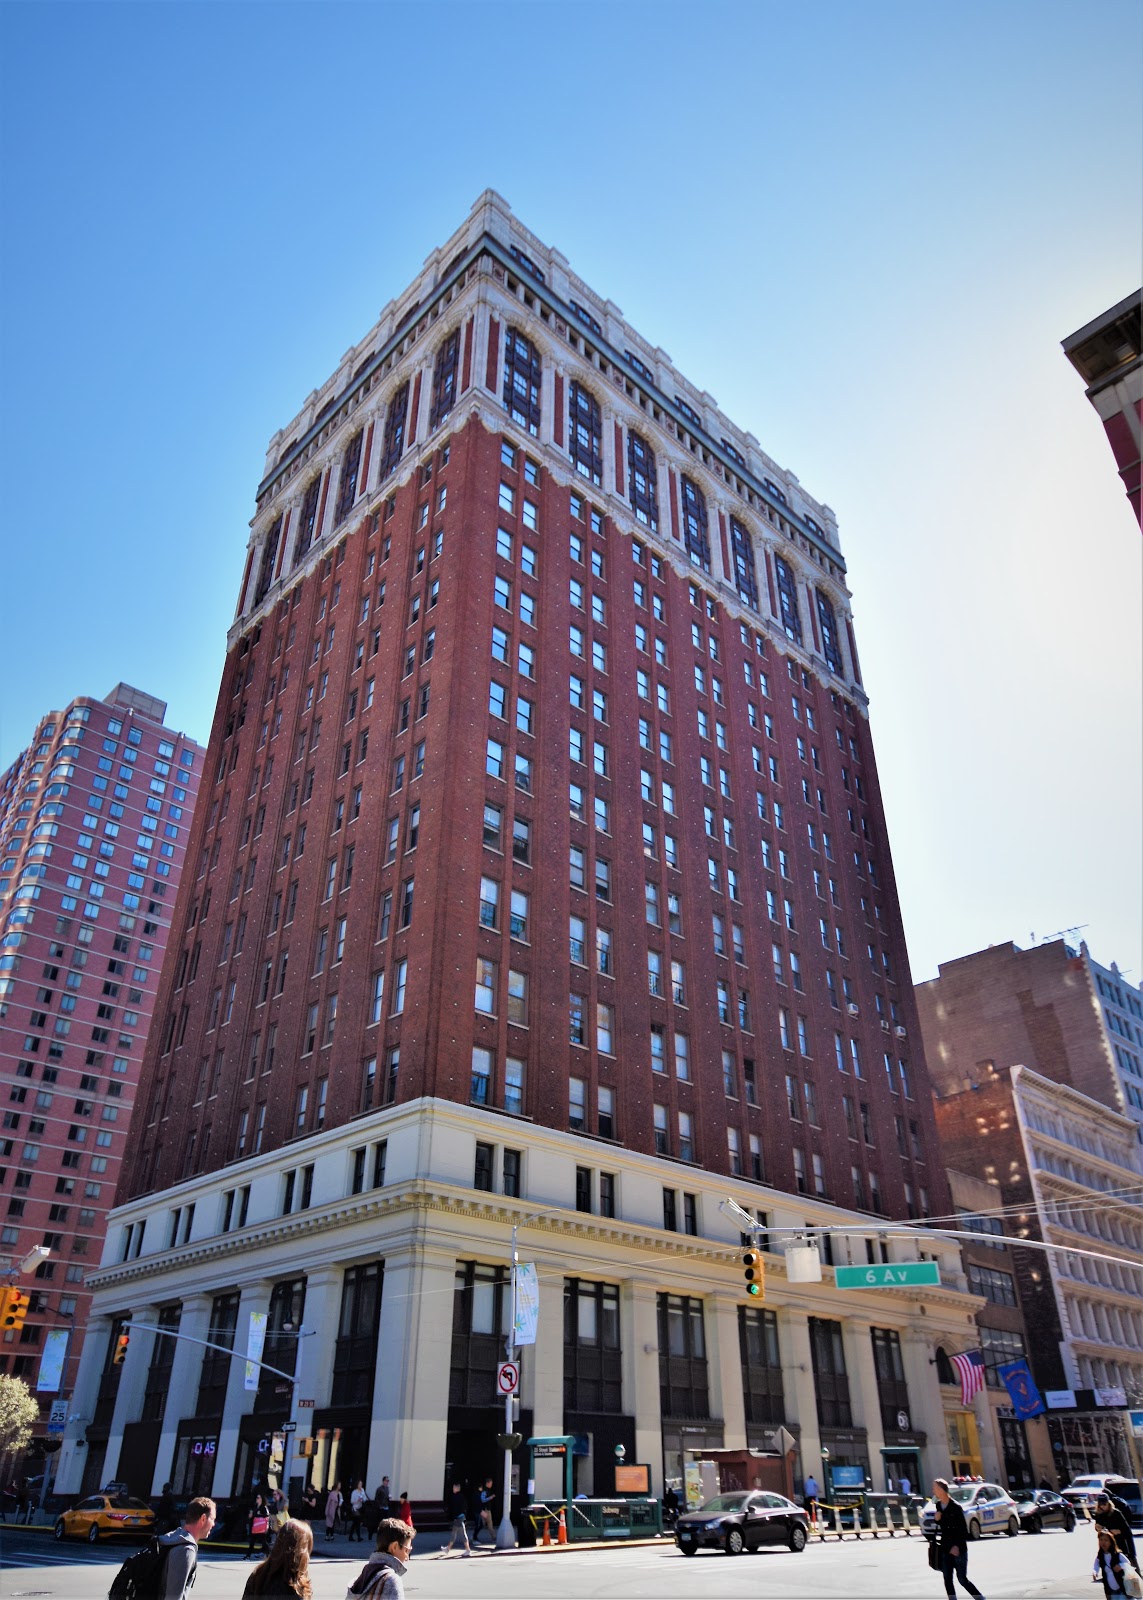 Daytonian in Manhattan: Masonic Temple and the Masonic Hall Building ...